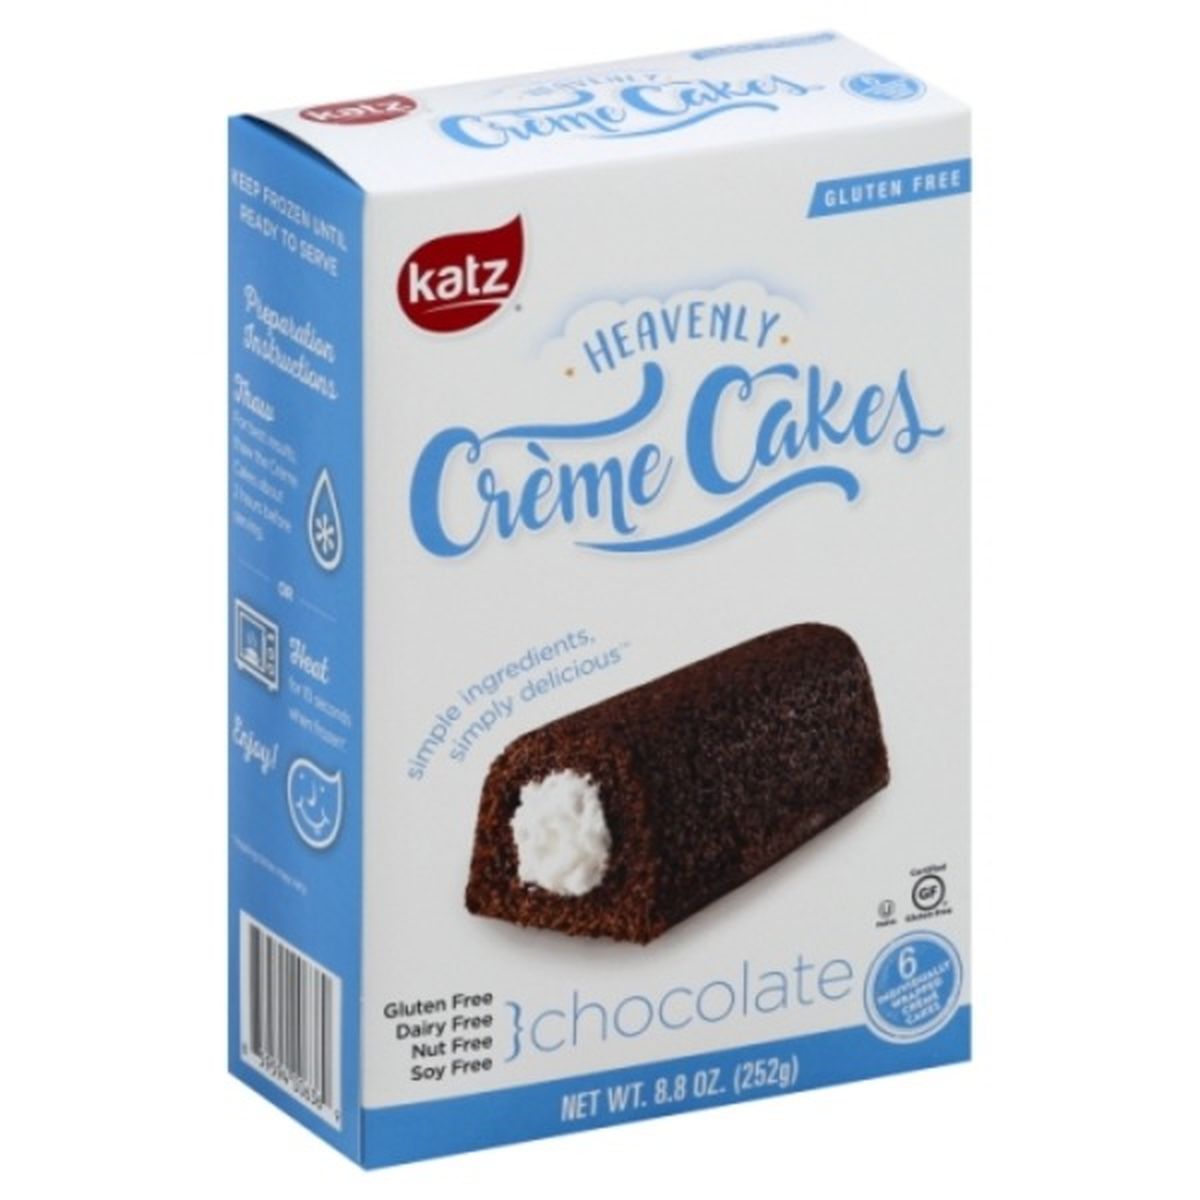 Calories in Katz Creme Cakes, Heavenly, Chocolate